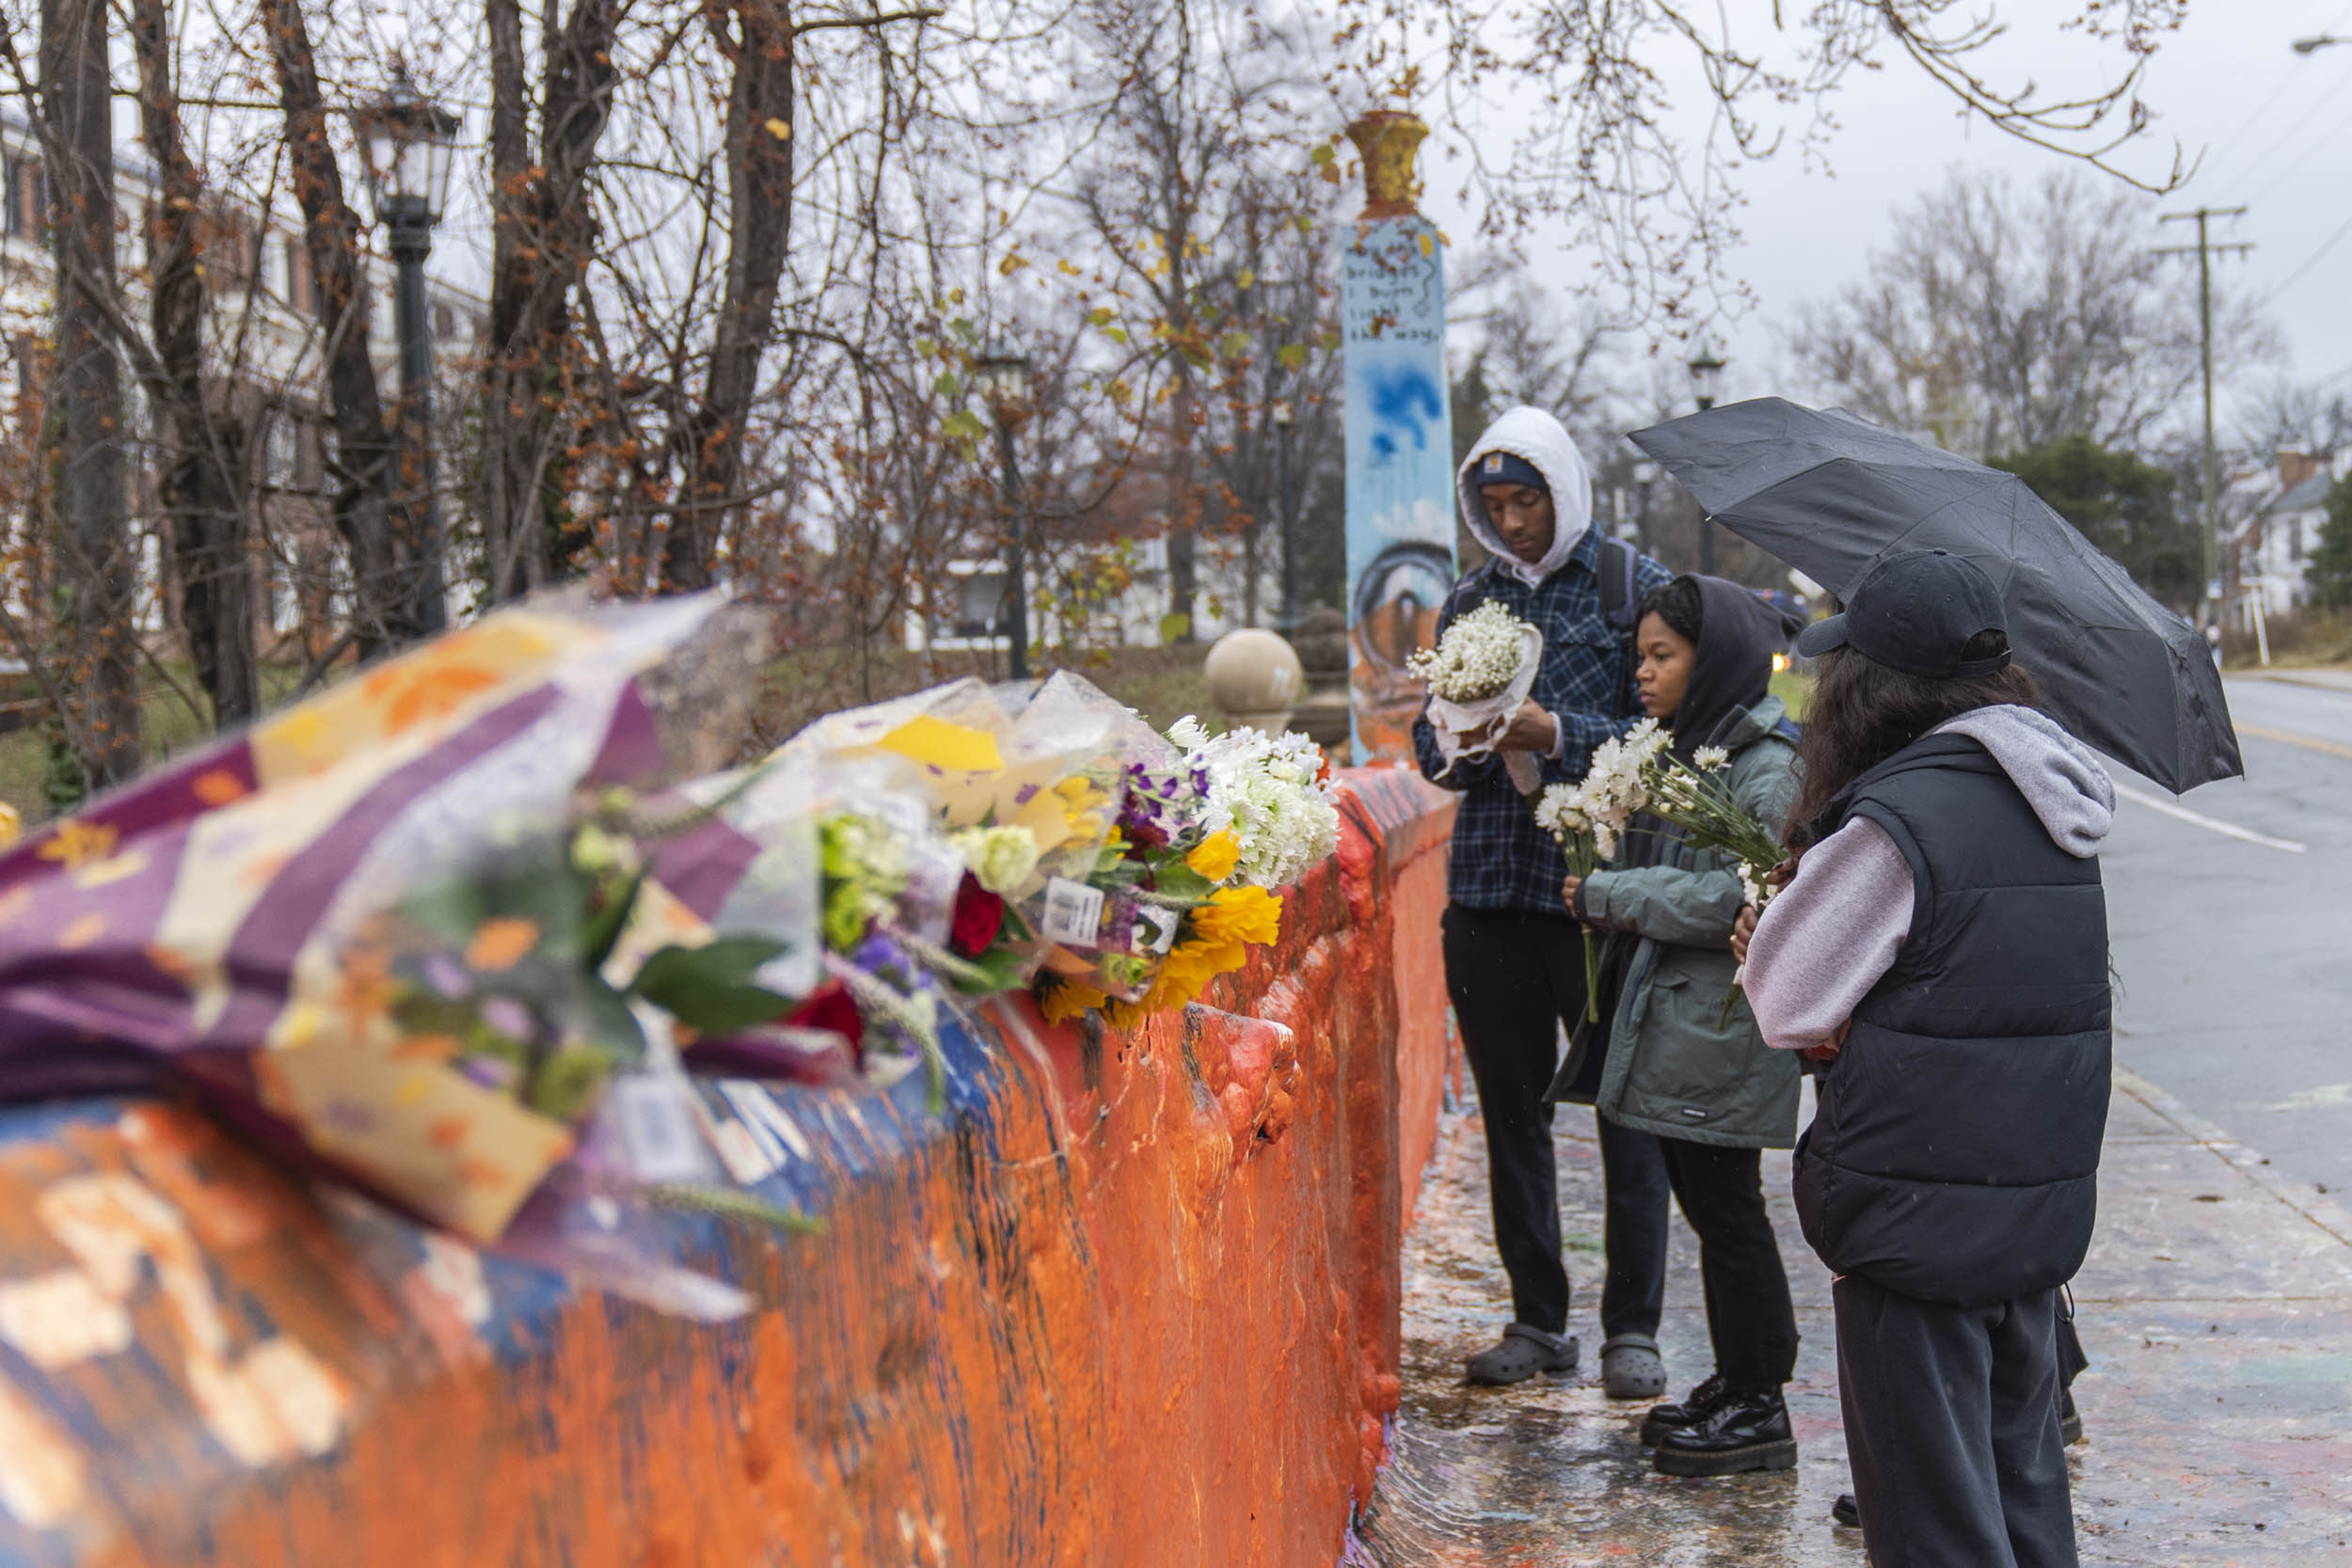 Students visiting Beta Bridge, placing flowers